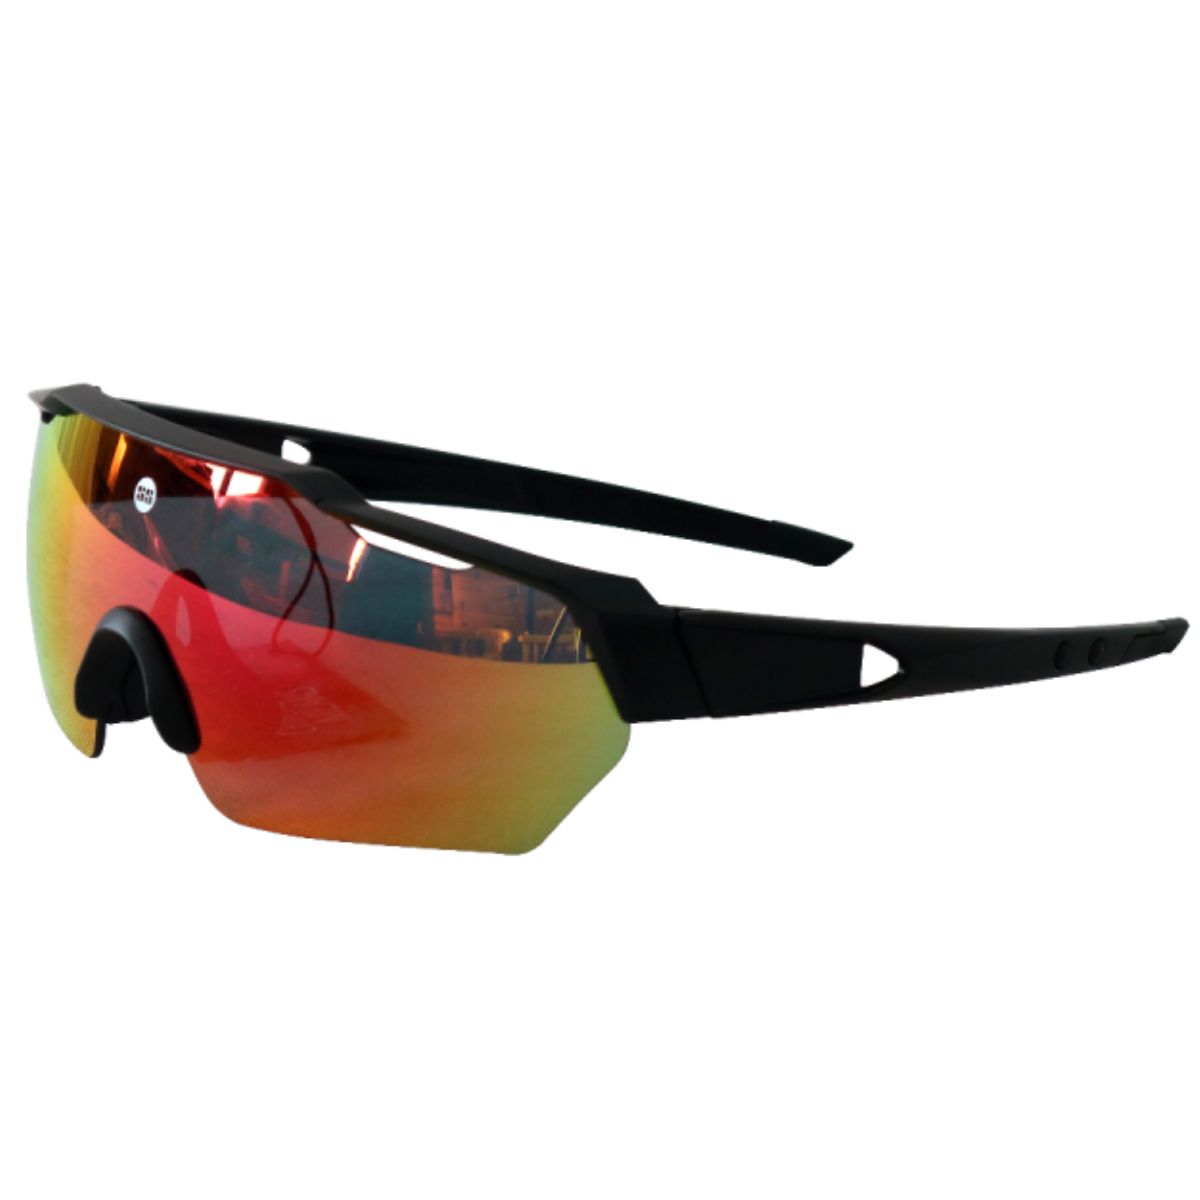 SS Legacy pro 3.0 sports Sunglasses